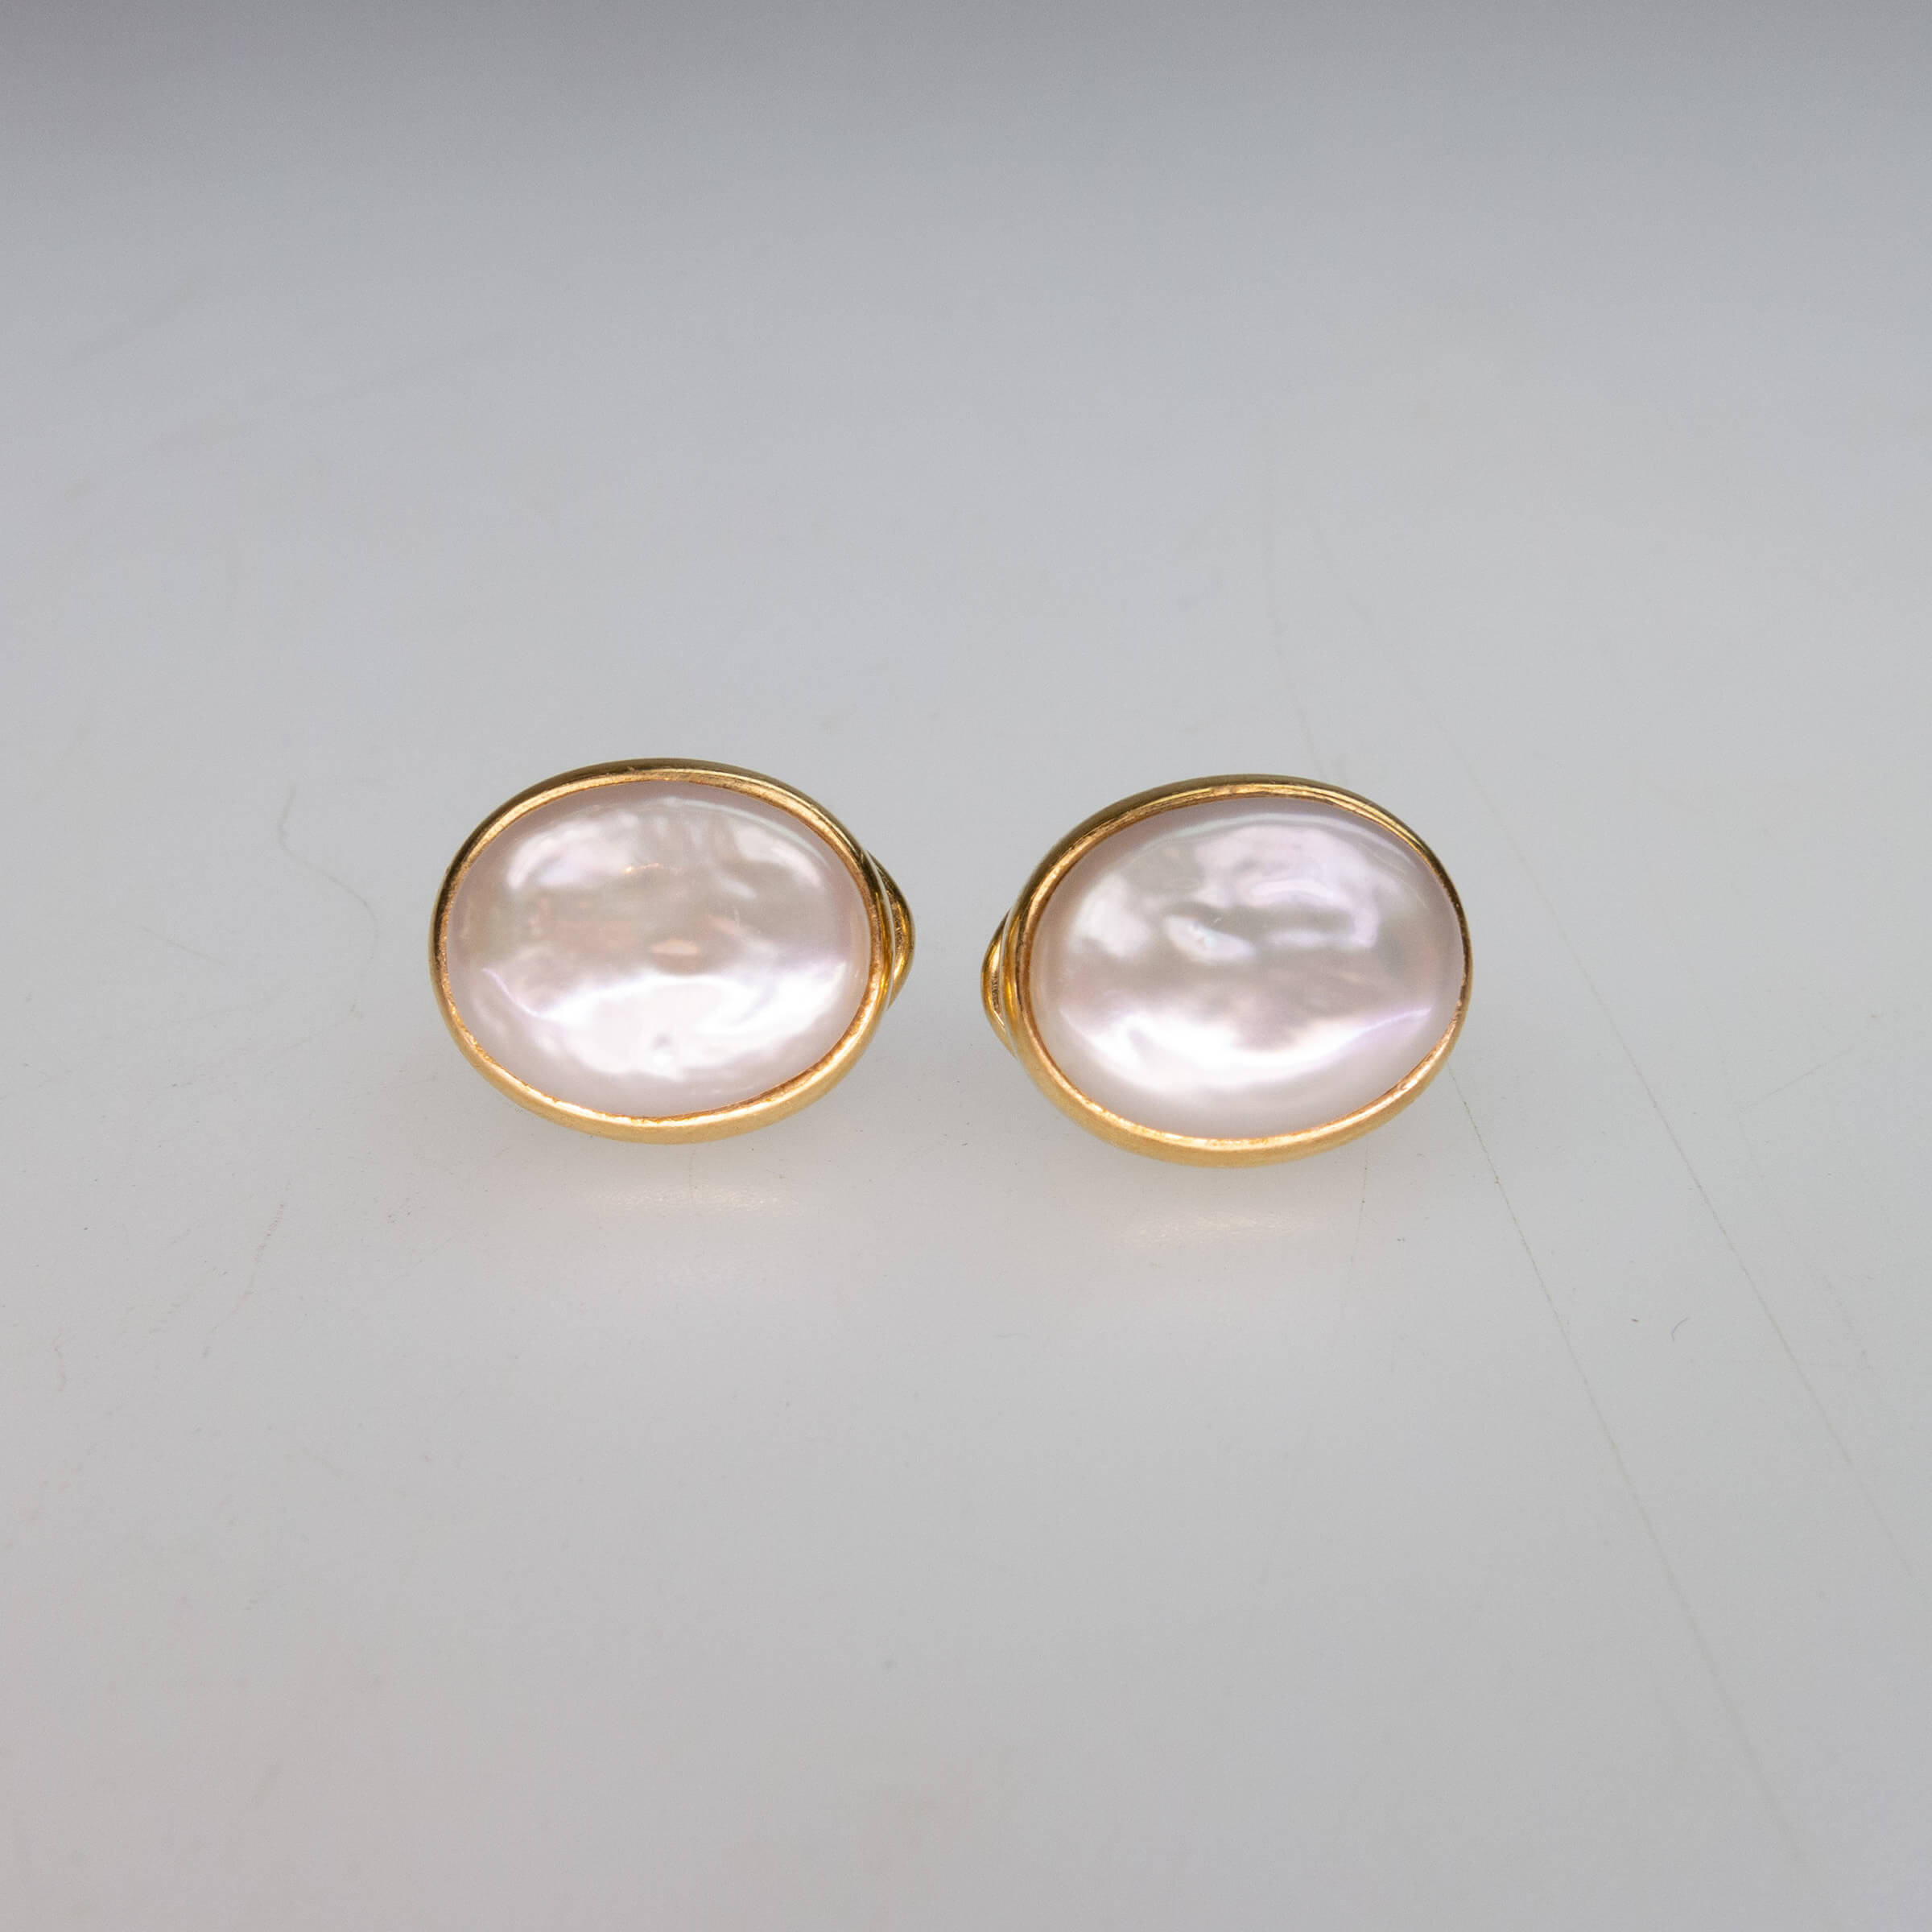 Pair Of 14k Yellow Gold And Biwa Pearl Stud Earrings